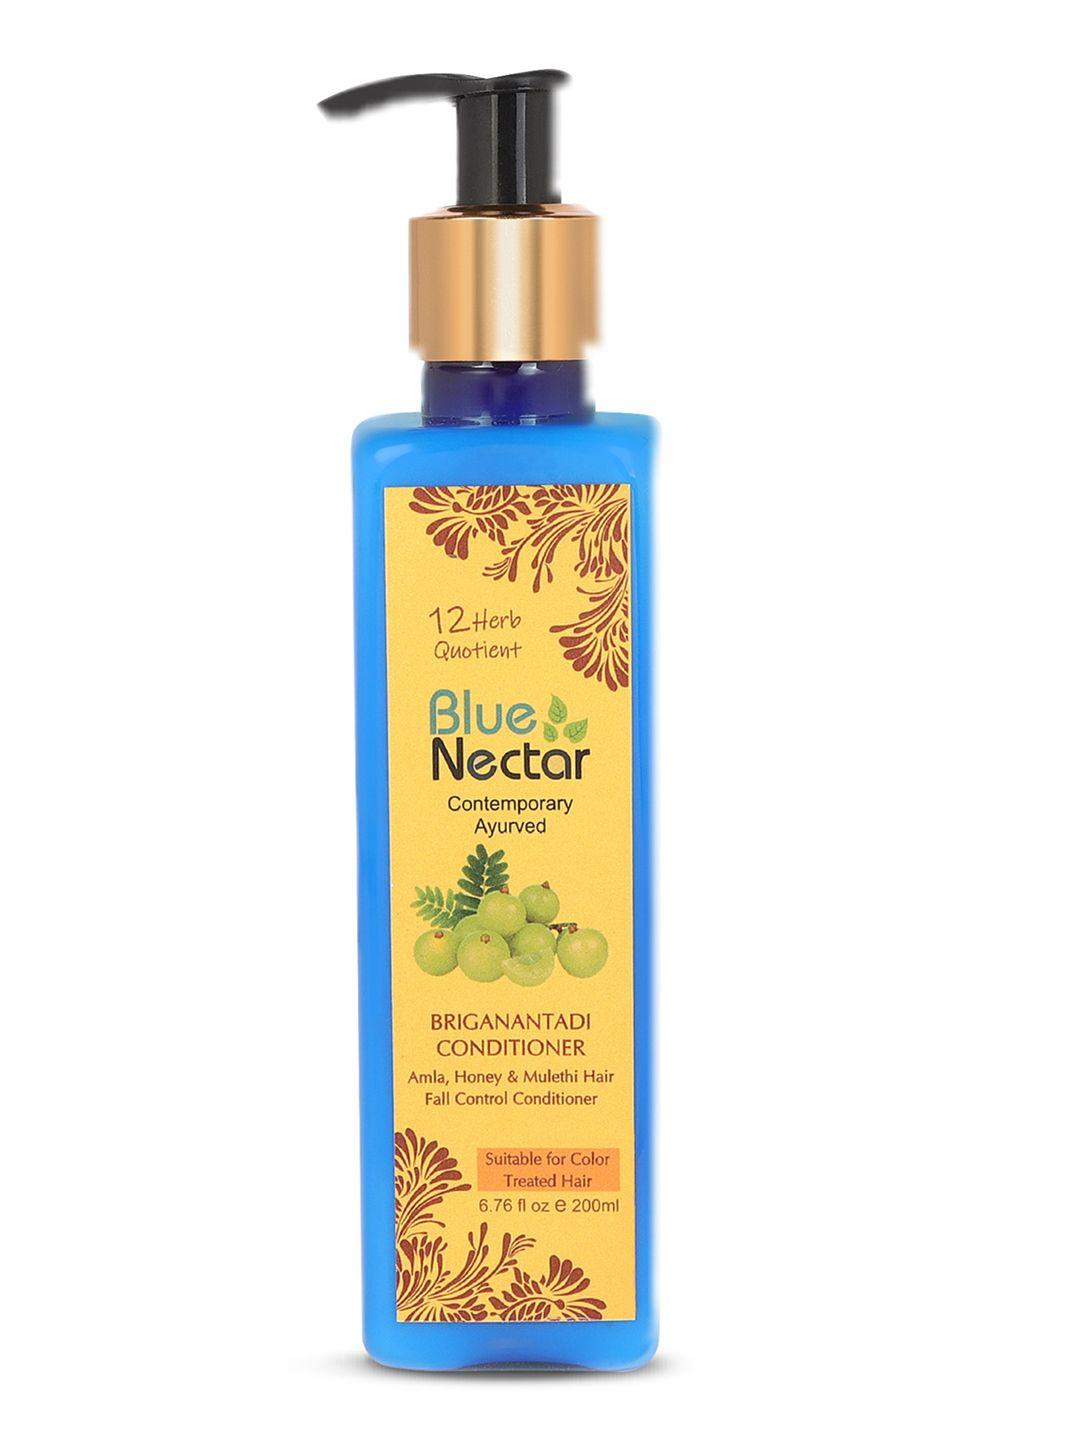 blue nectar hair fall control conditioner with amla, honey & mulethi 200ml